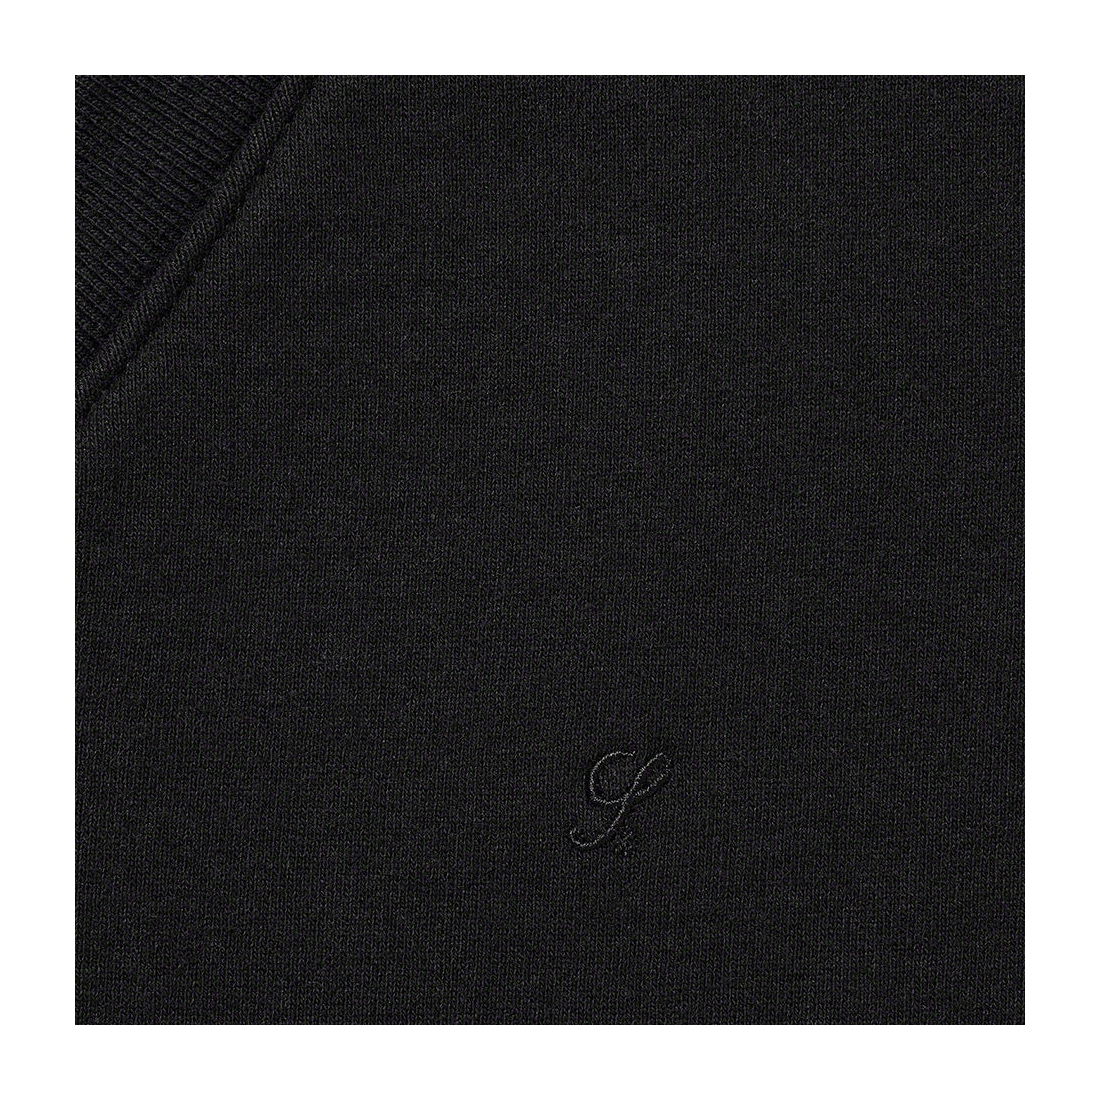 Details on Sweatshirt Vest Black from spring summer
                                                    2023 (Price is $128)